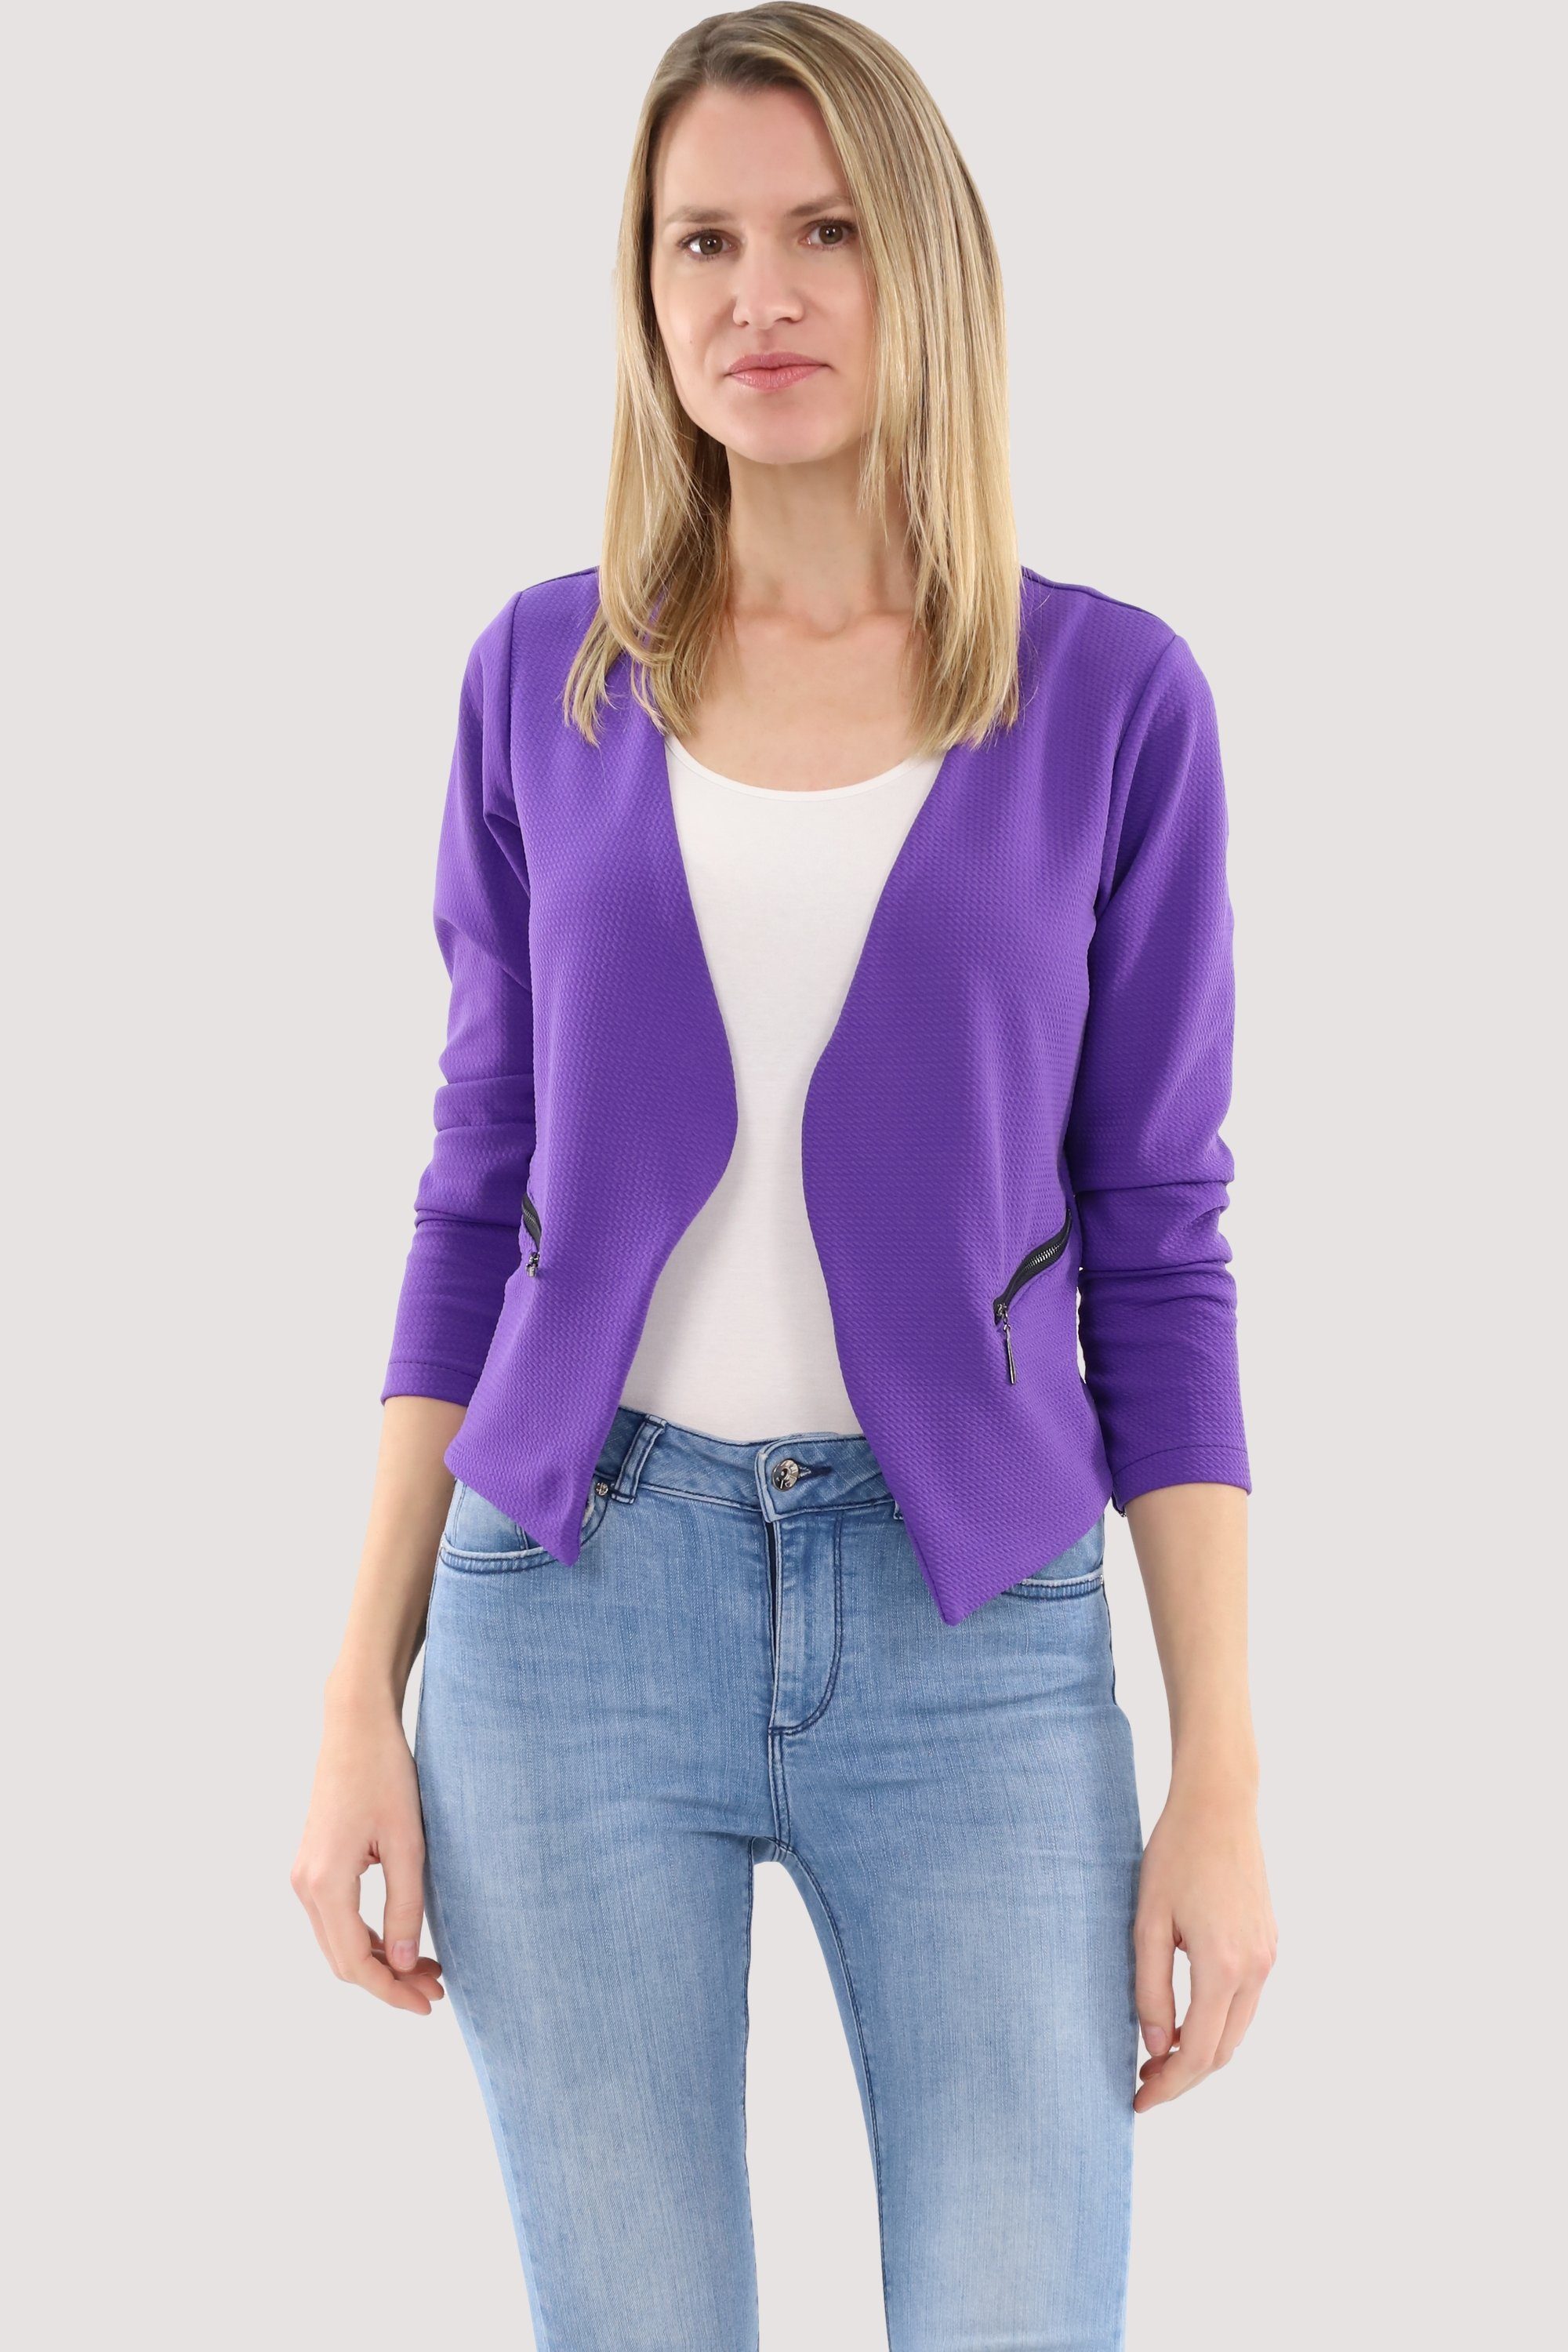 violett Jackenblazer malito than fashion Sweatblazer Basic-Look 6040 im more